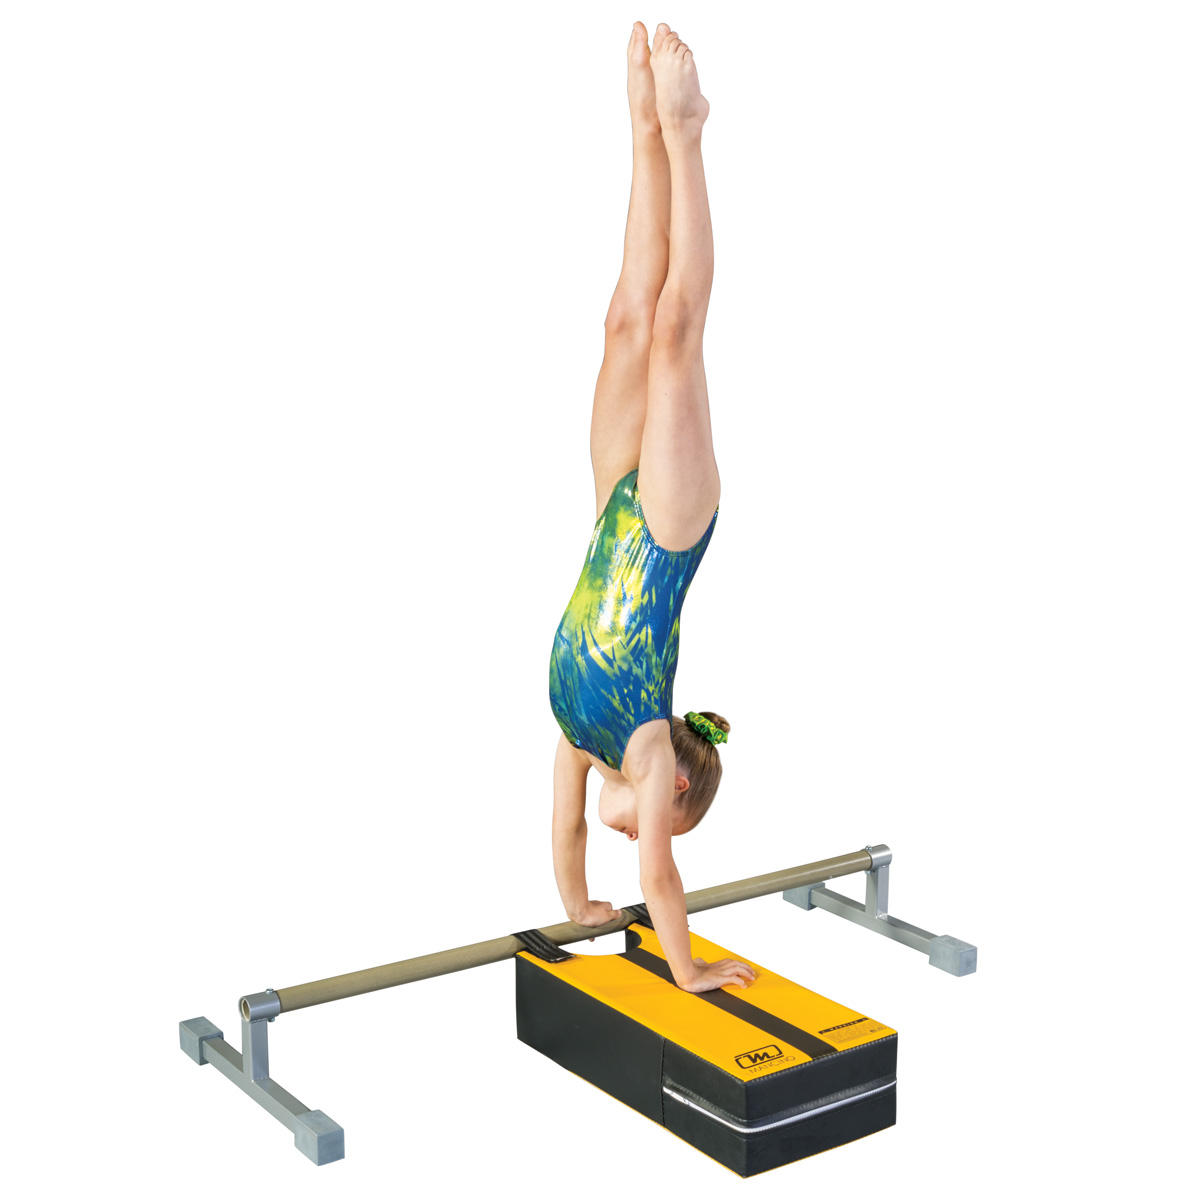 Mancino Floor Bar with pirouette trainer gymnast